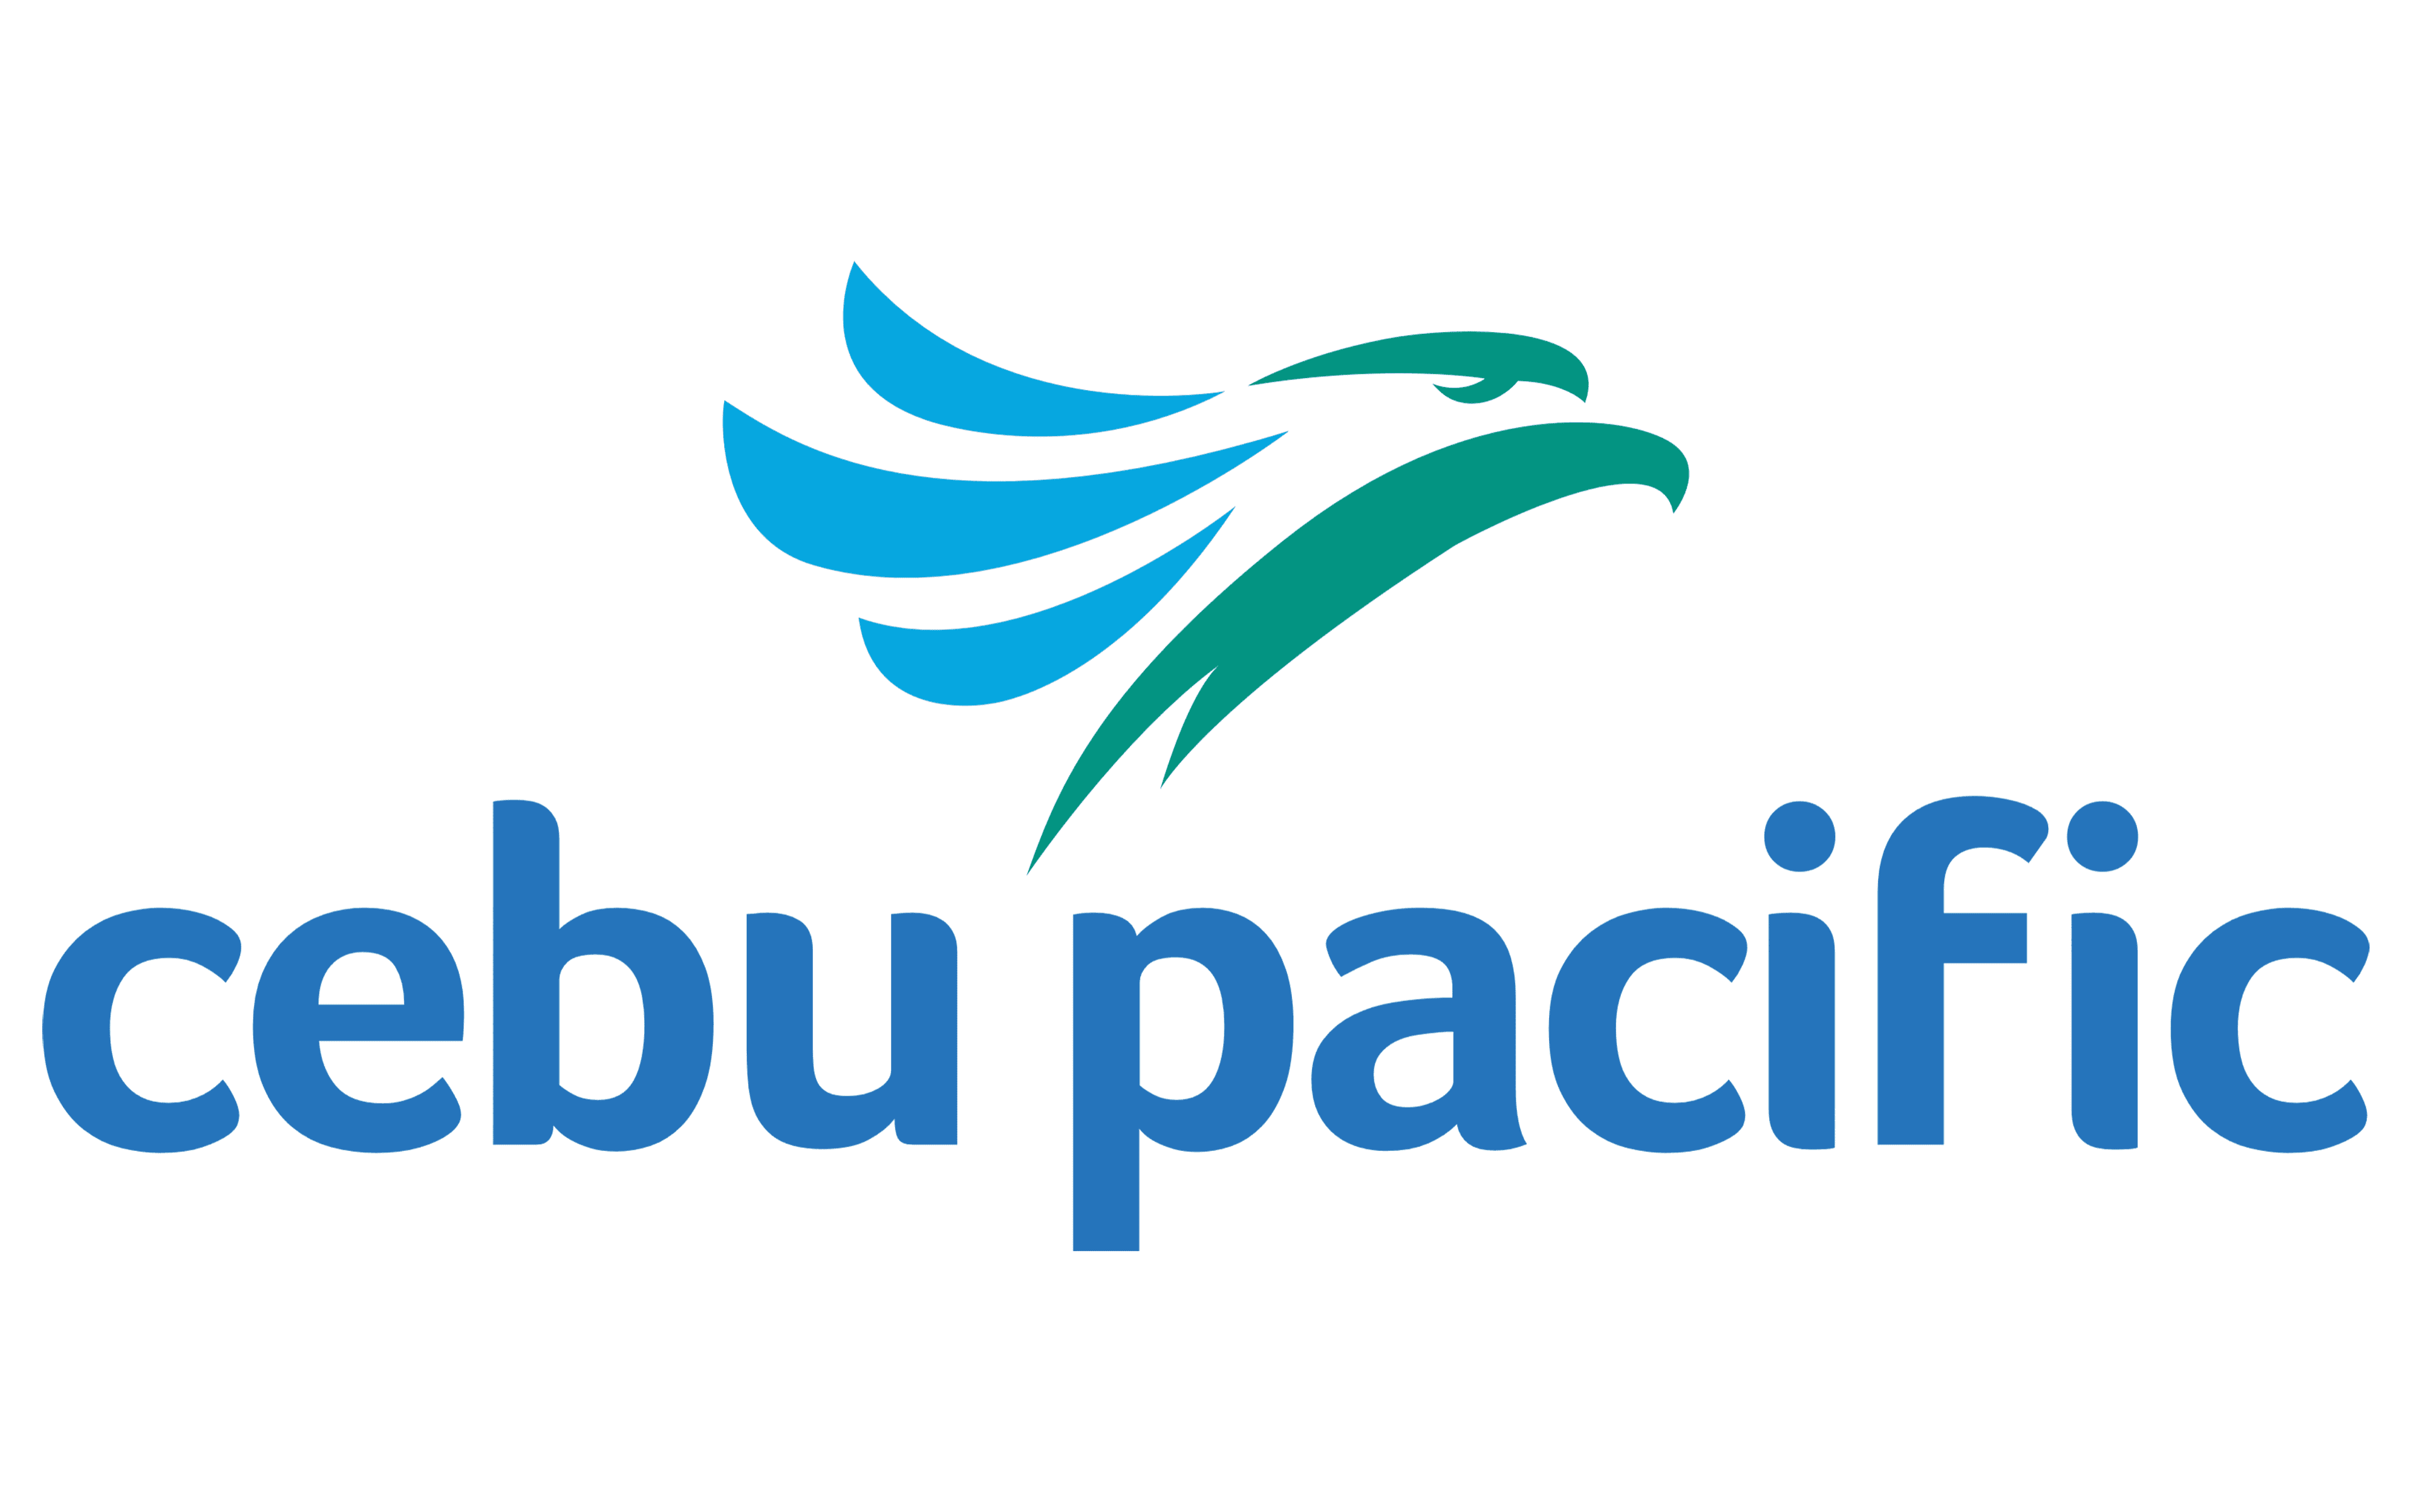 Cebu Pacific